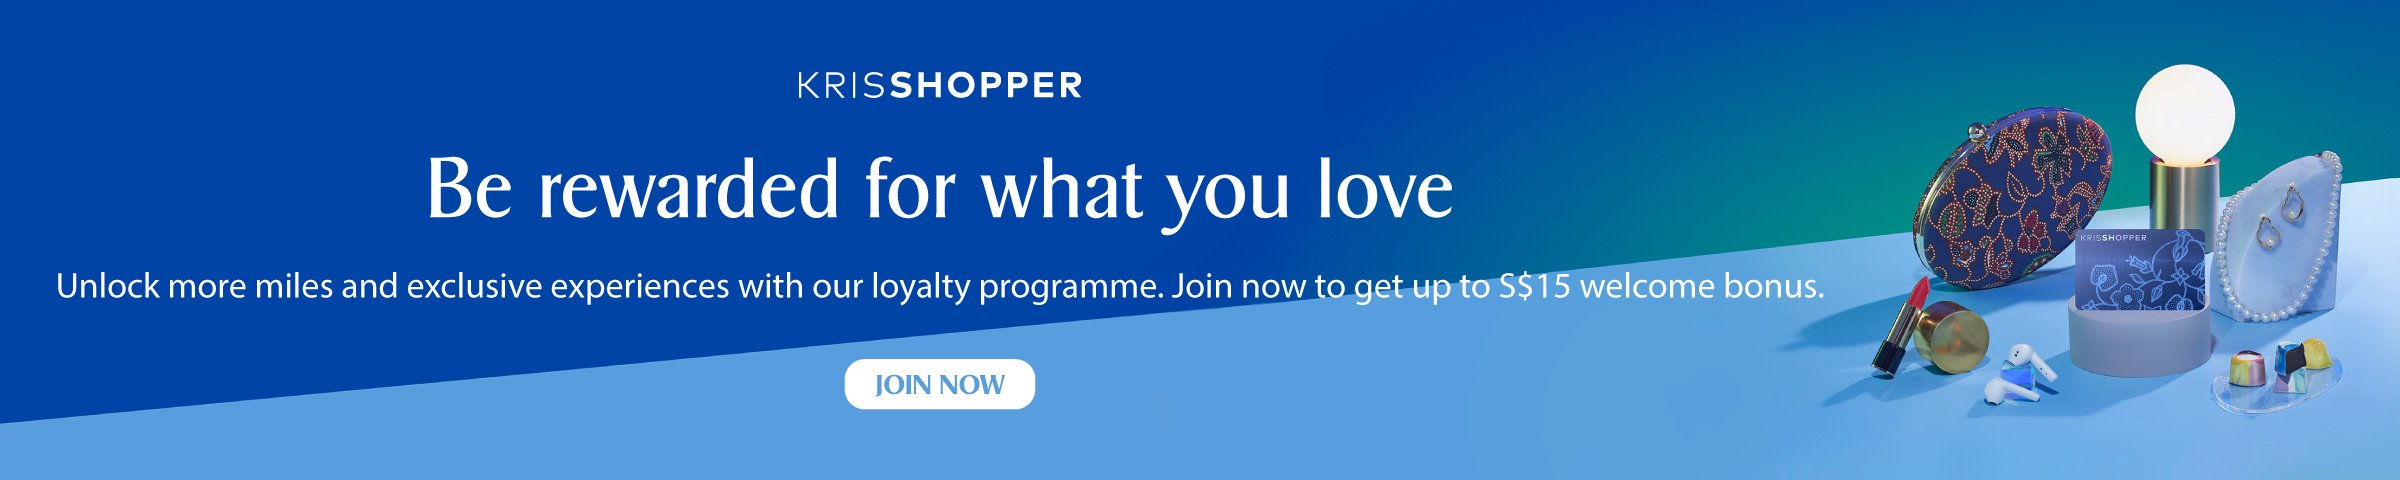 KrisShopper Welcome Bonus: Up to S$15 off promo code